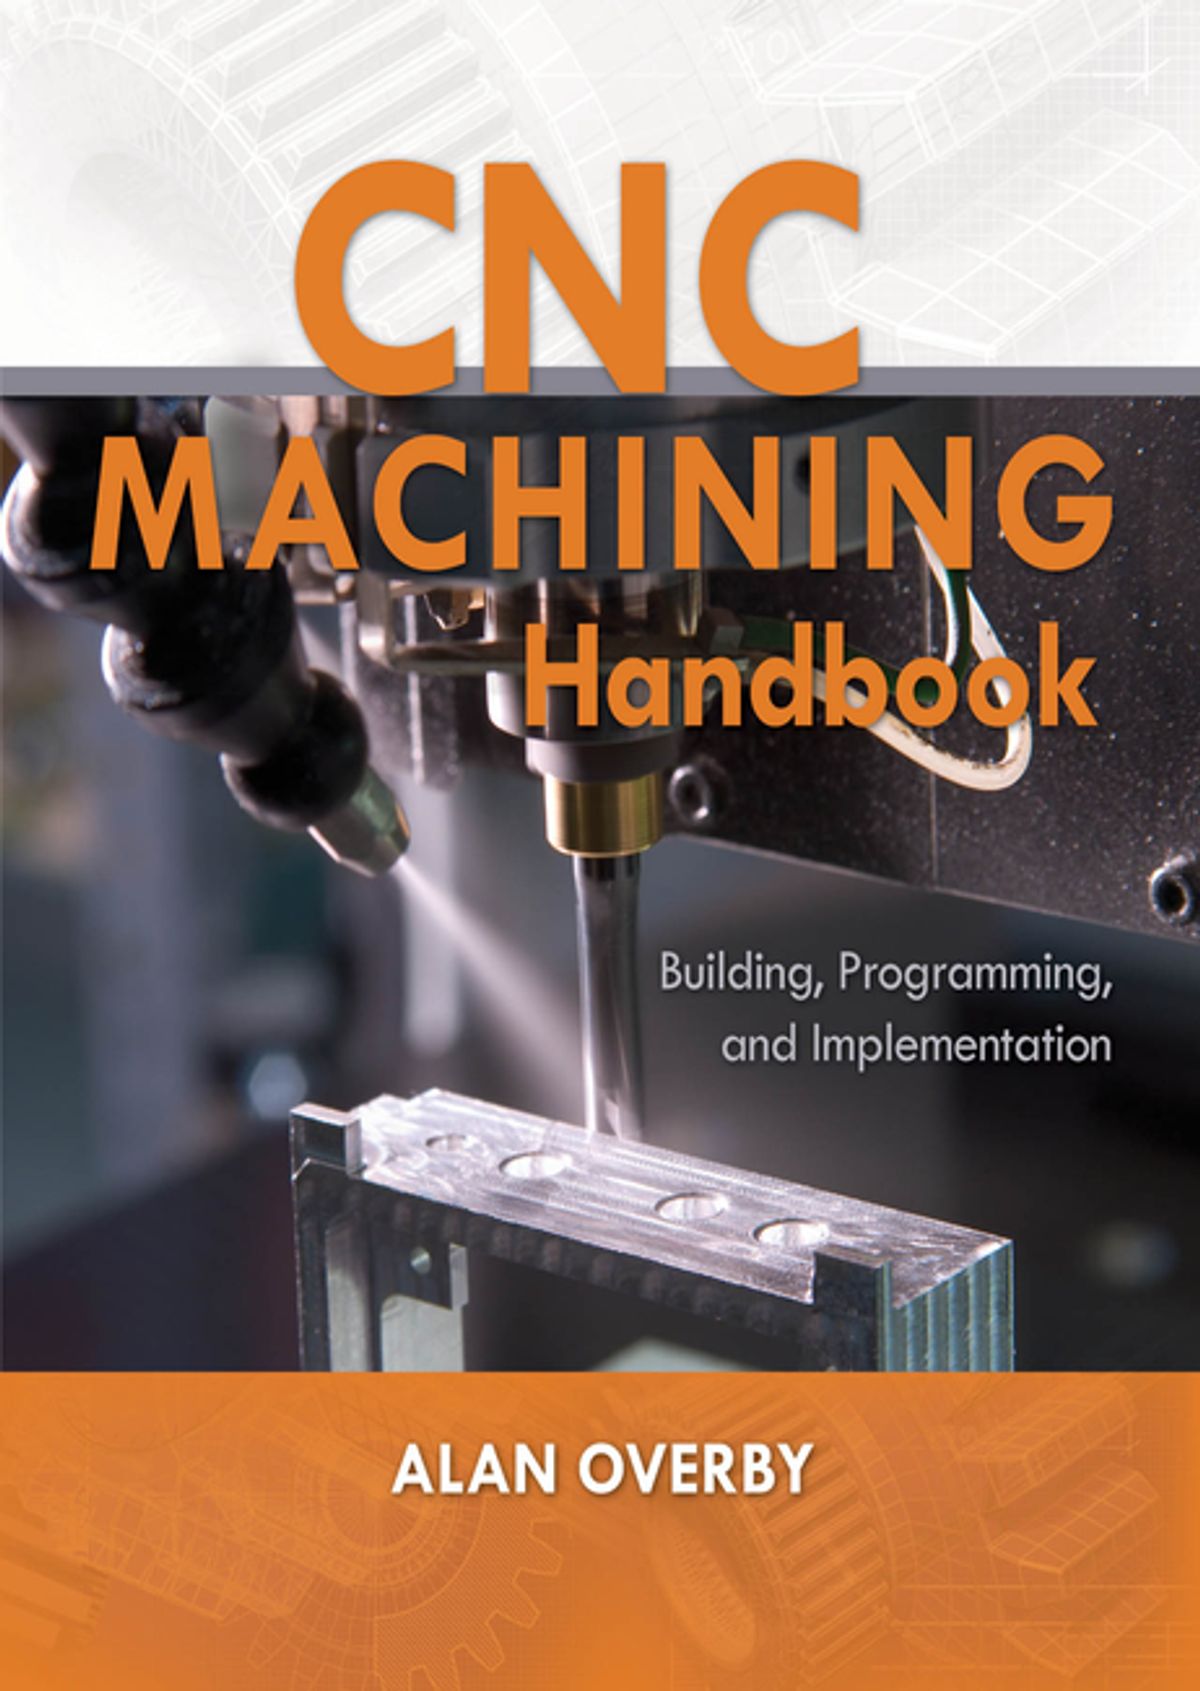 Cnc programming handbook third edition pdf download